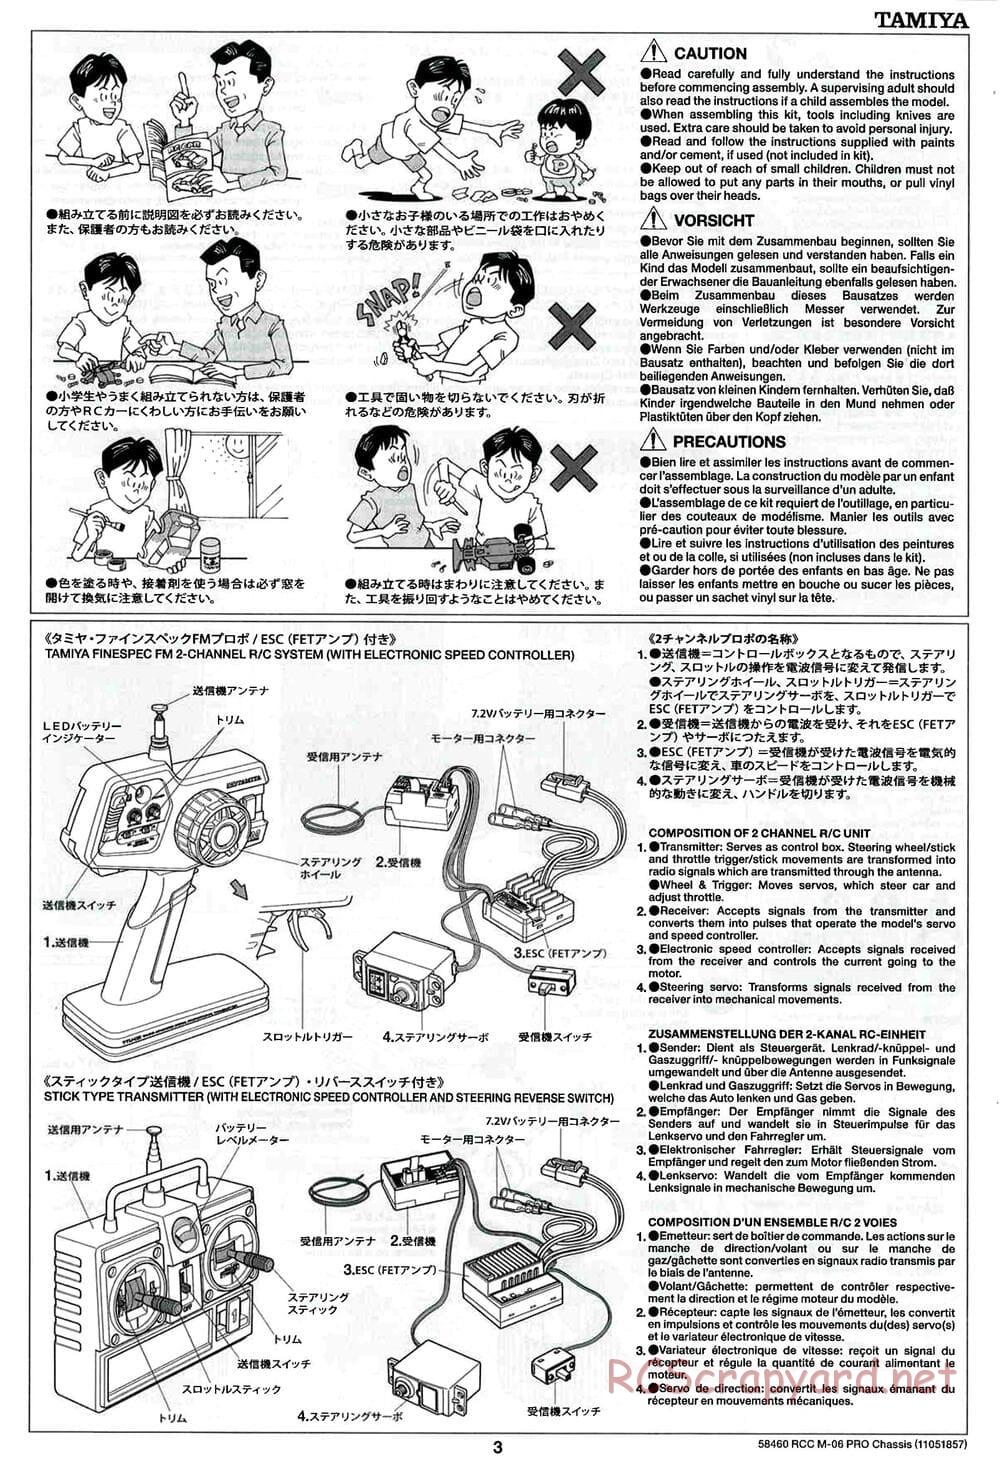 Tamiya - M-06 Pro Chassis - Manual - Page 3